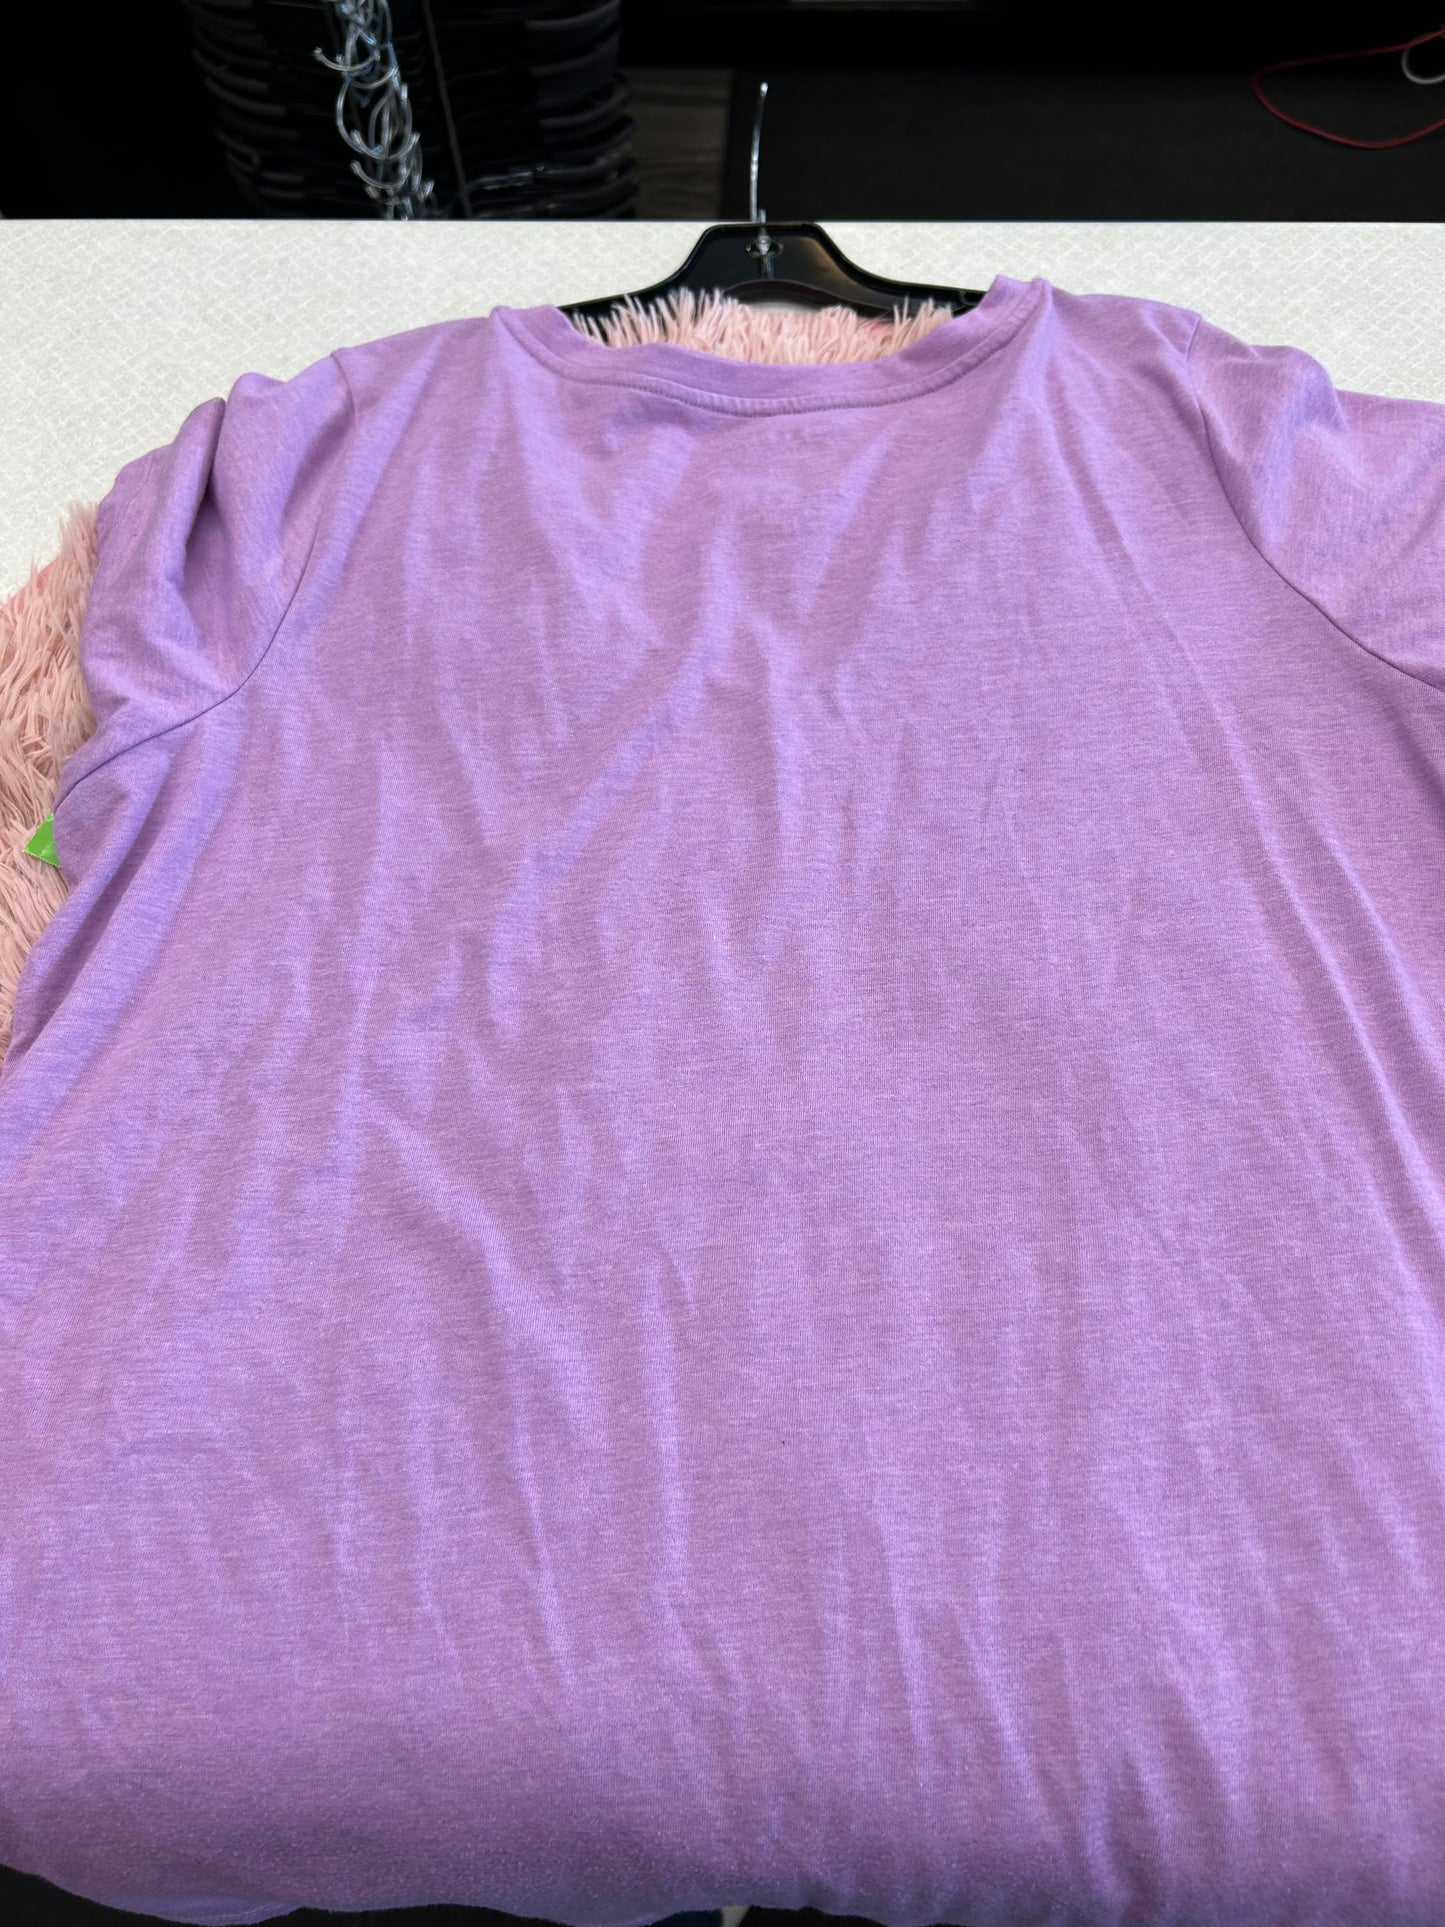 Purple Top Short Sleeve Torrid, Size 2x